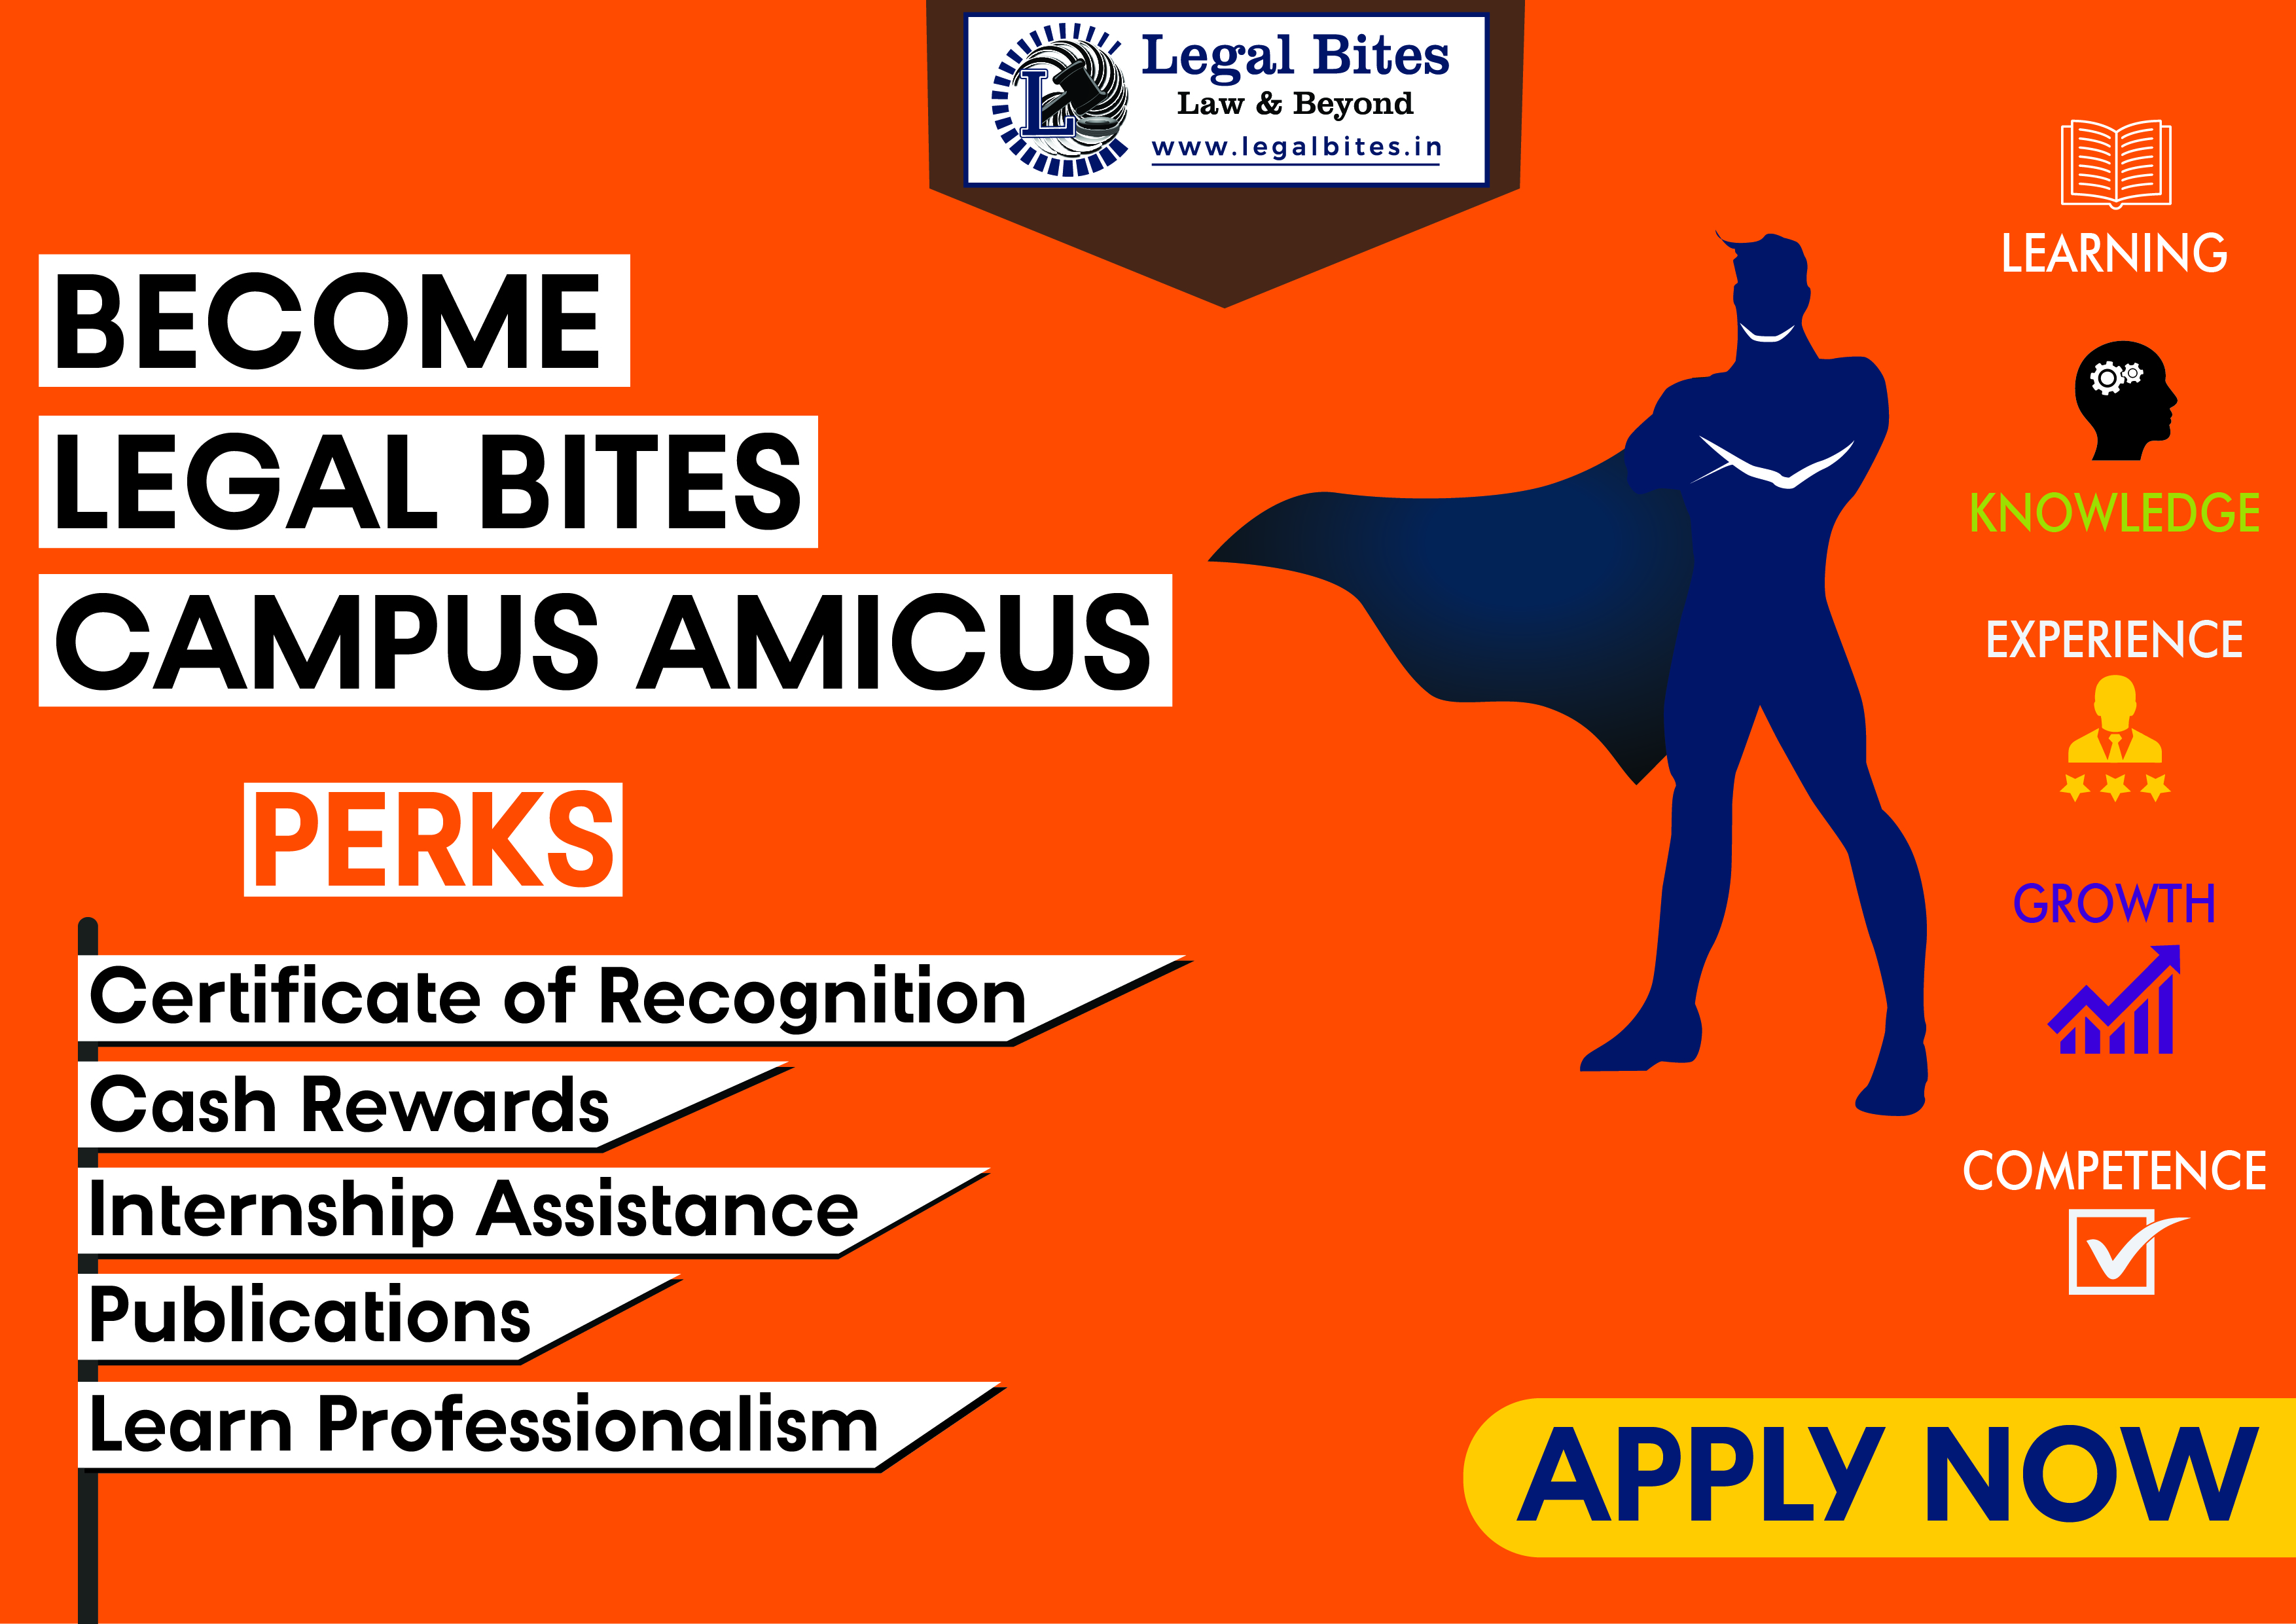 Call for Applications: Legal Bites Campus Amicus Program 2020